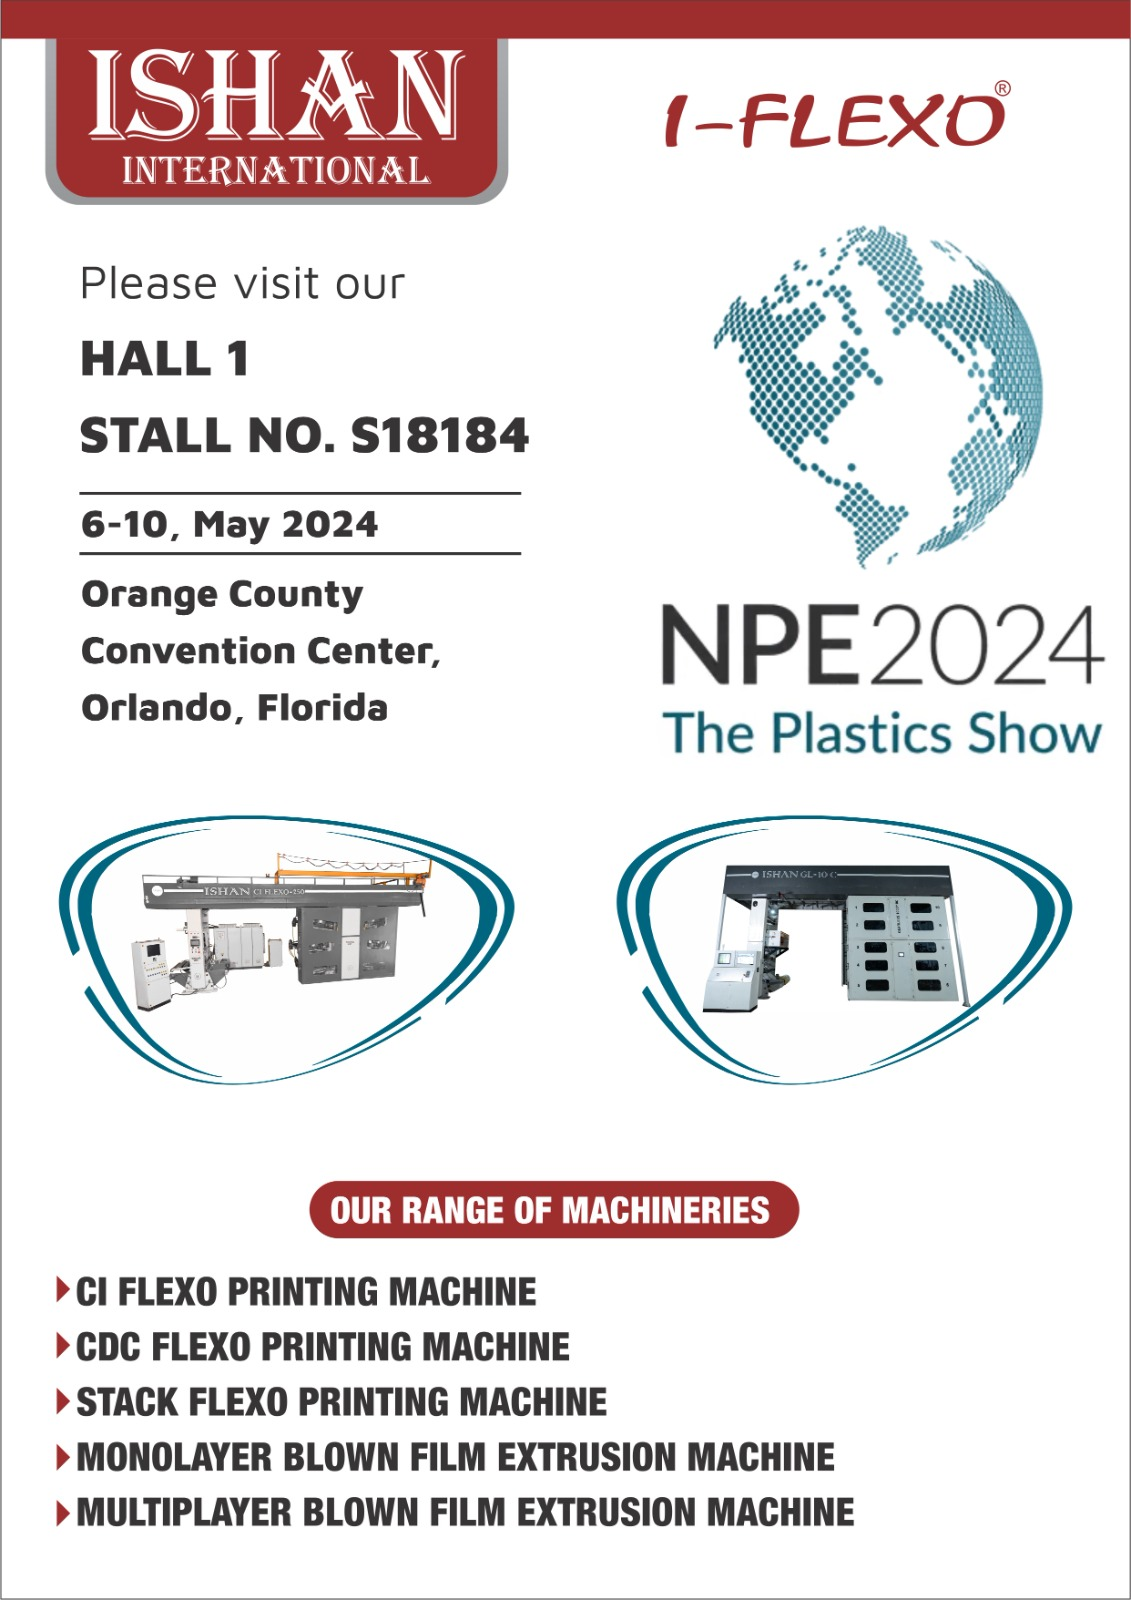 npe 2024 the plastics show